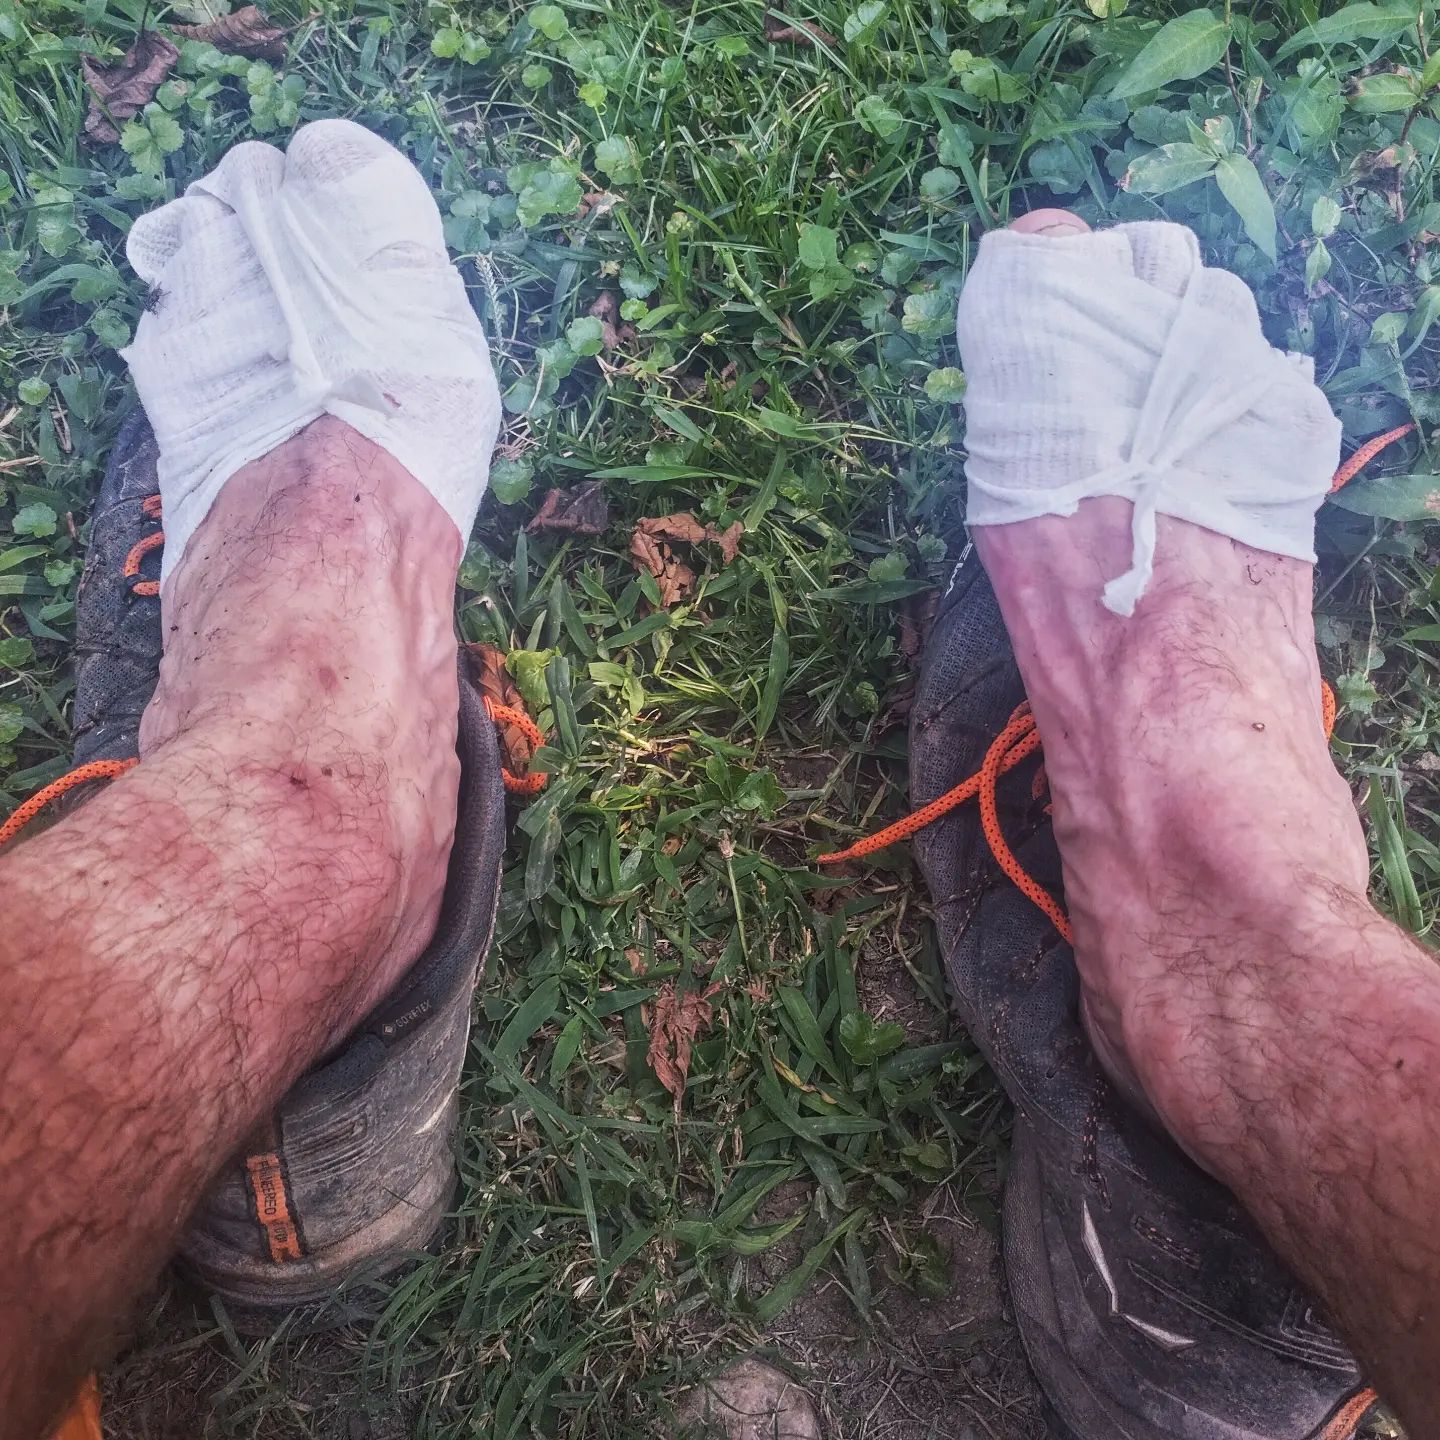 A photograph of bandaged feet.